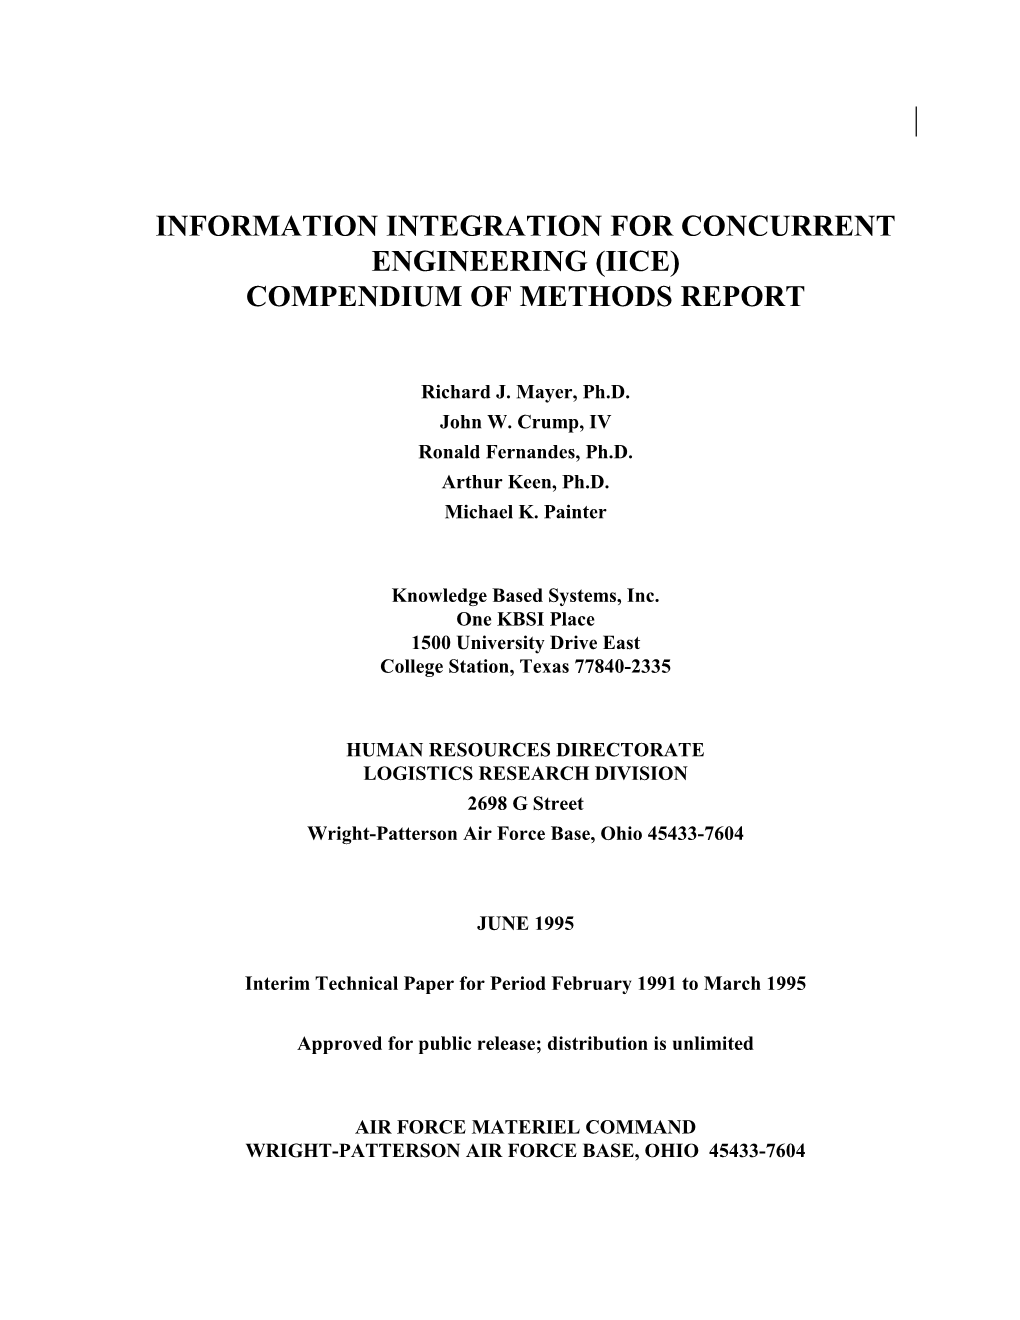 Information Integration for Concurrent Engineering (Iice) Compendium of Methods Report